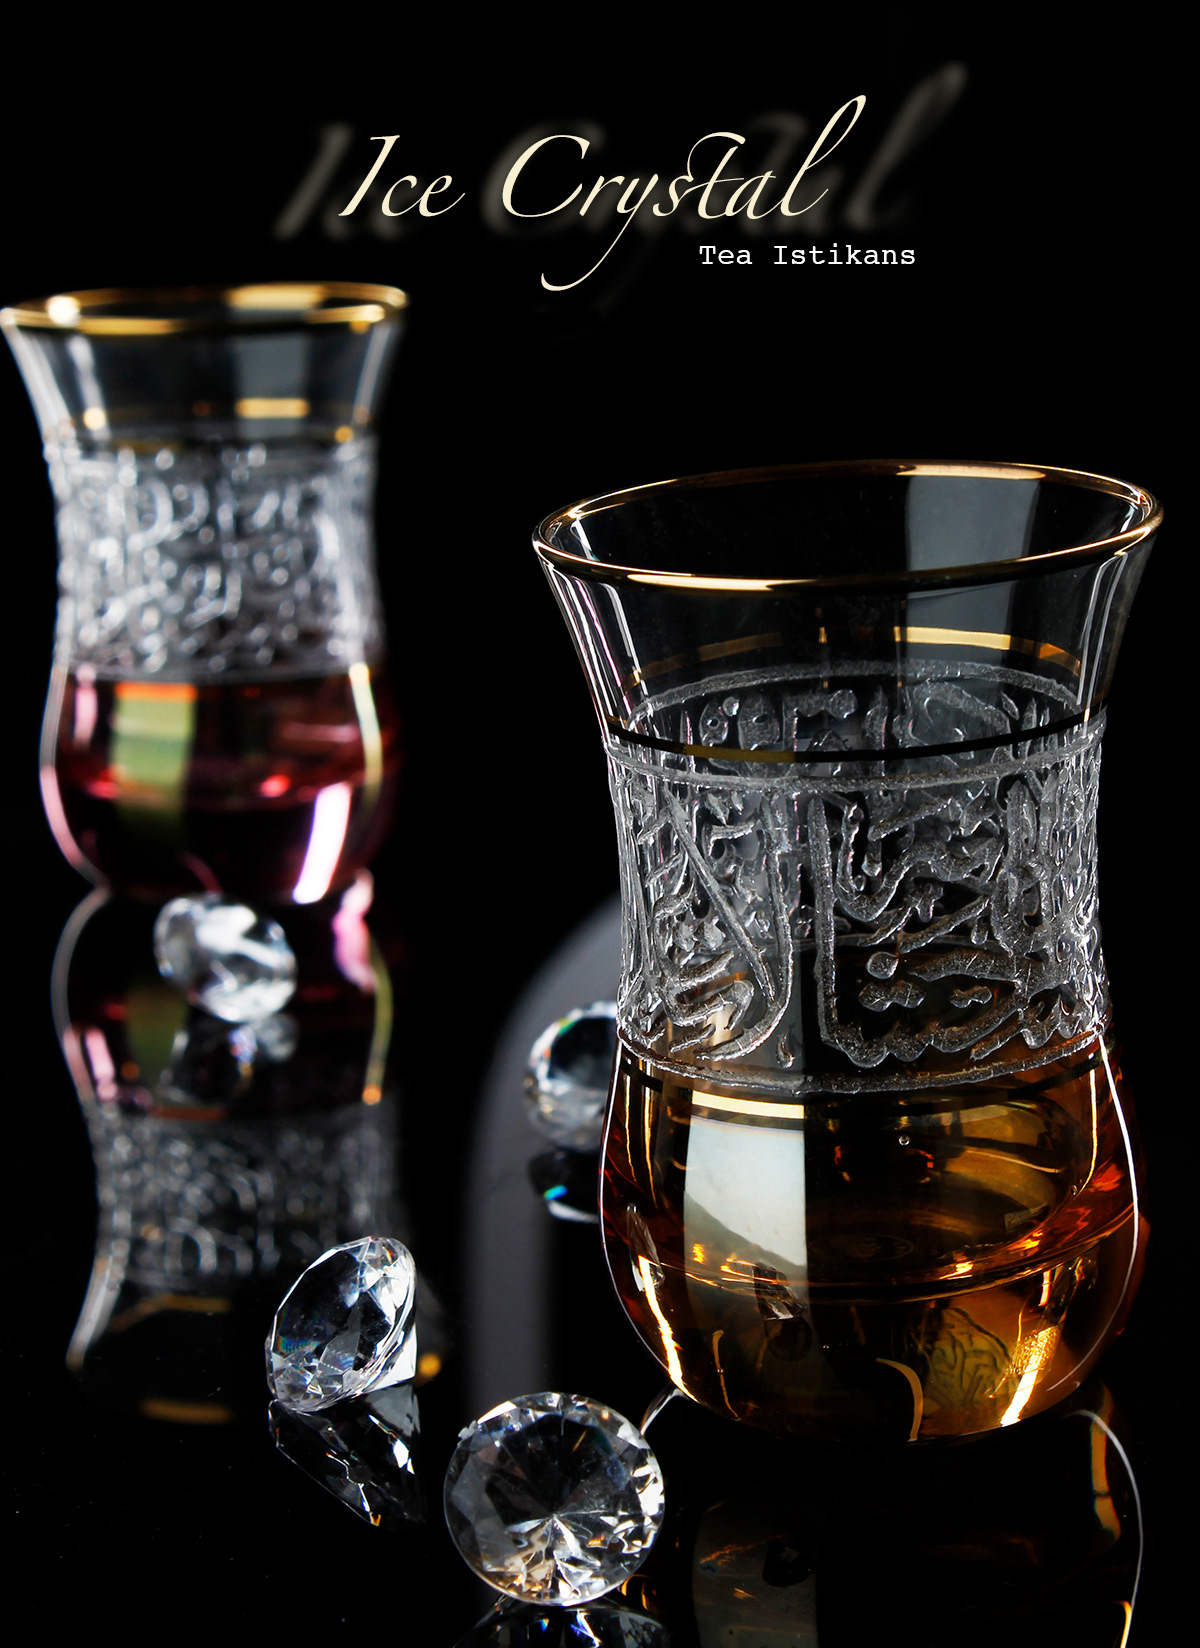 glass glassware photo arabic light studio black White transperant reflection